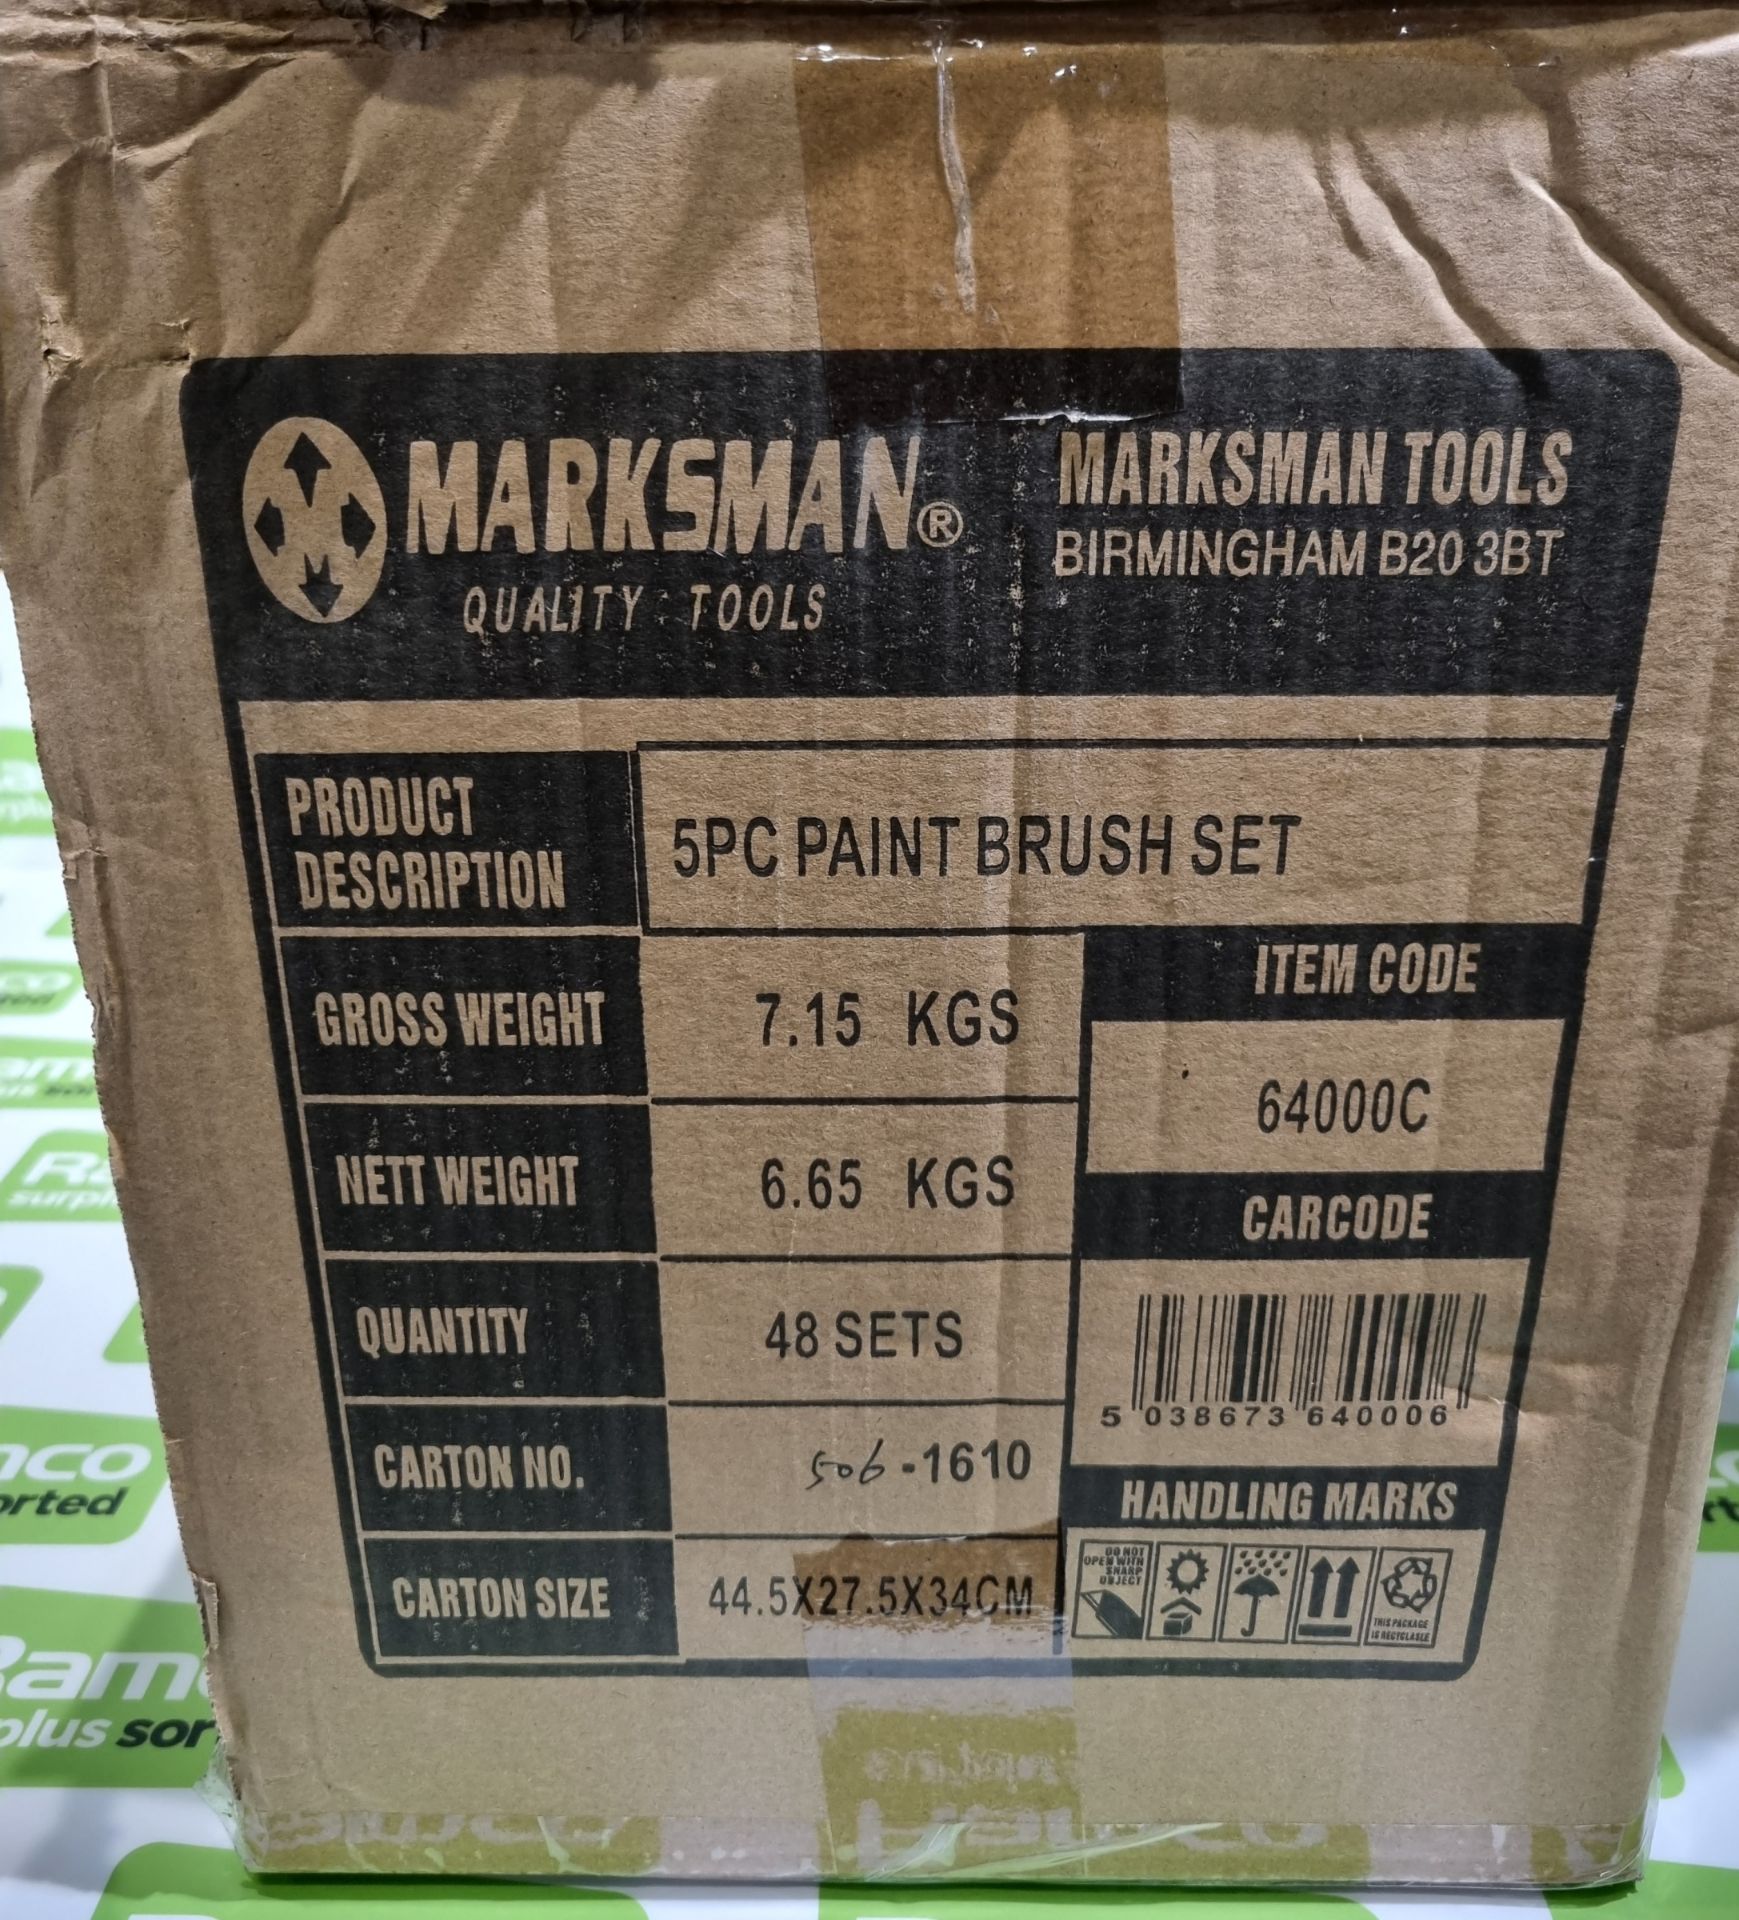 48x Marksman Paint Brushes (5pcs per pack) - Image 2 of 2